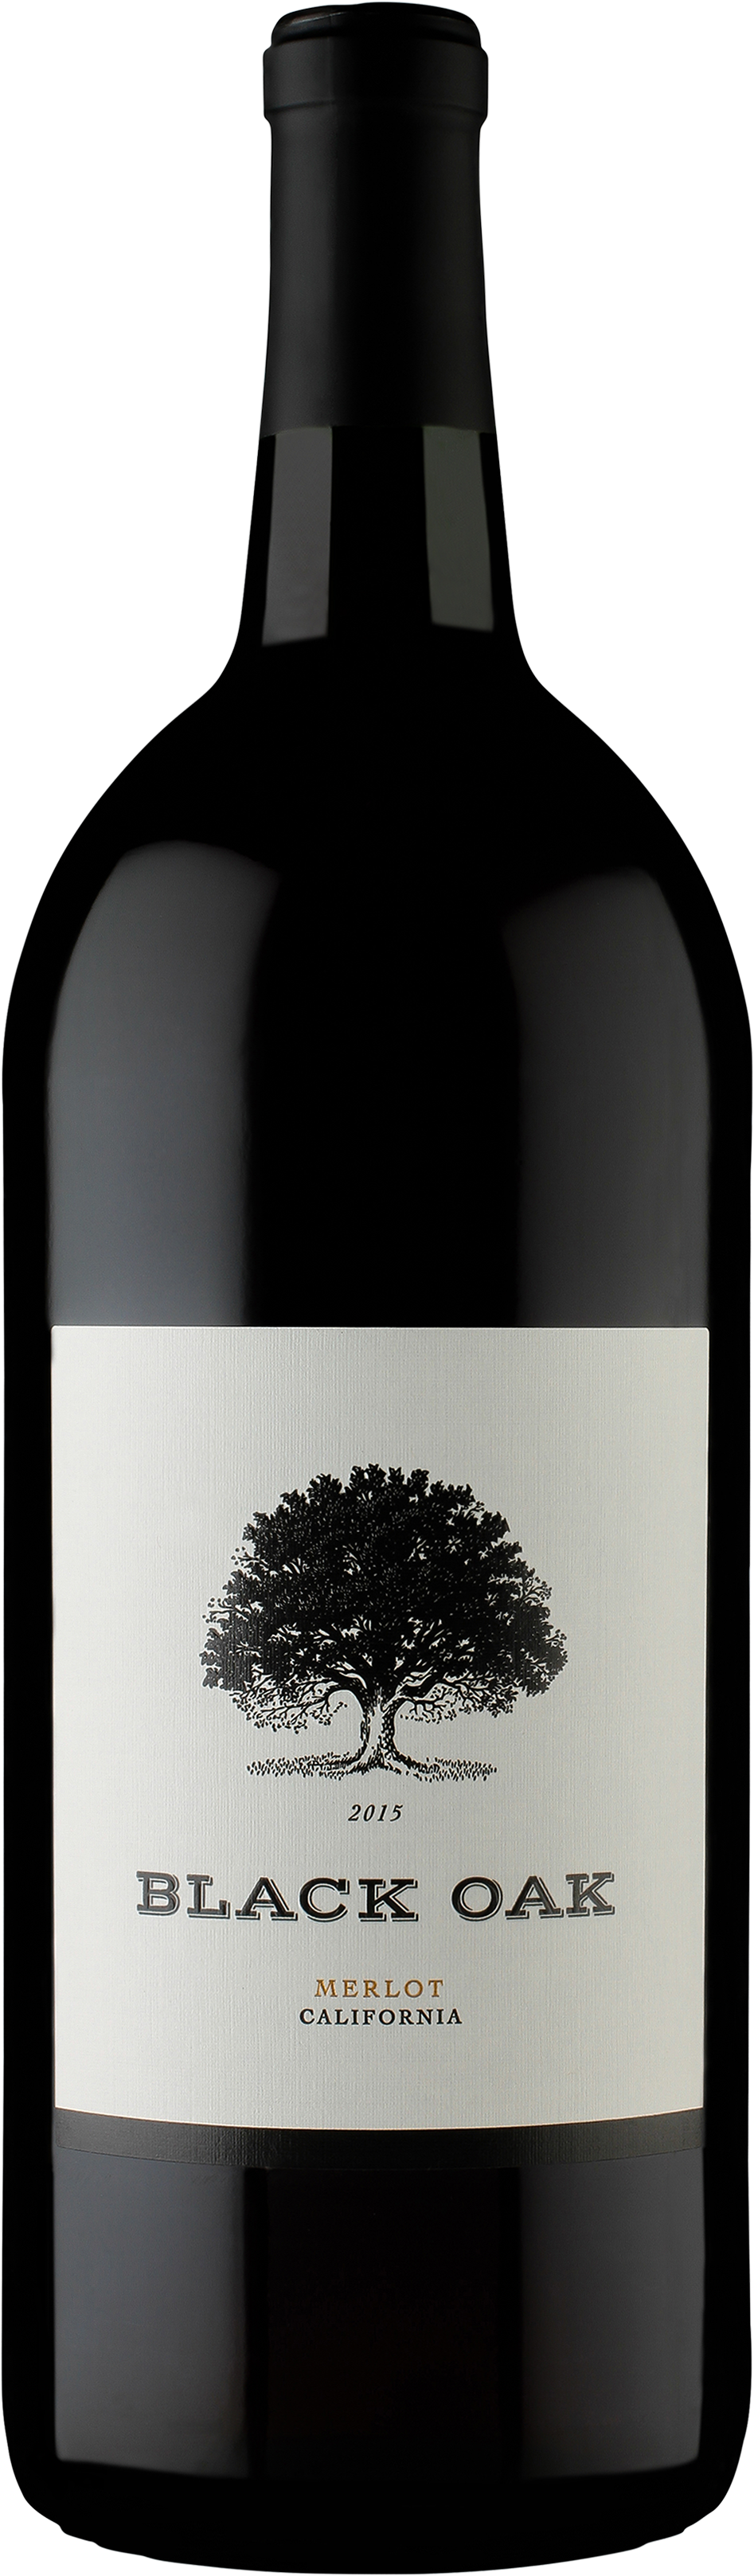 Black Oak Merlot - Black Oak Wine (947x3235)